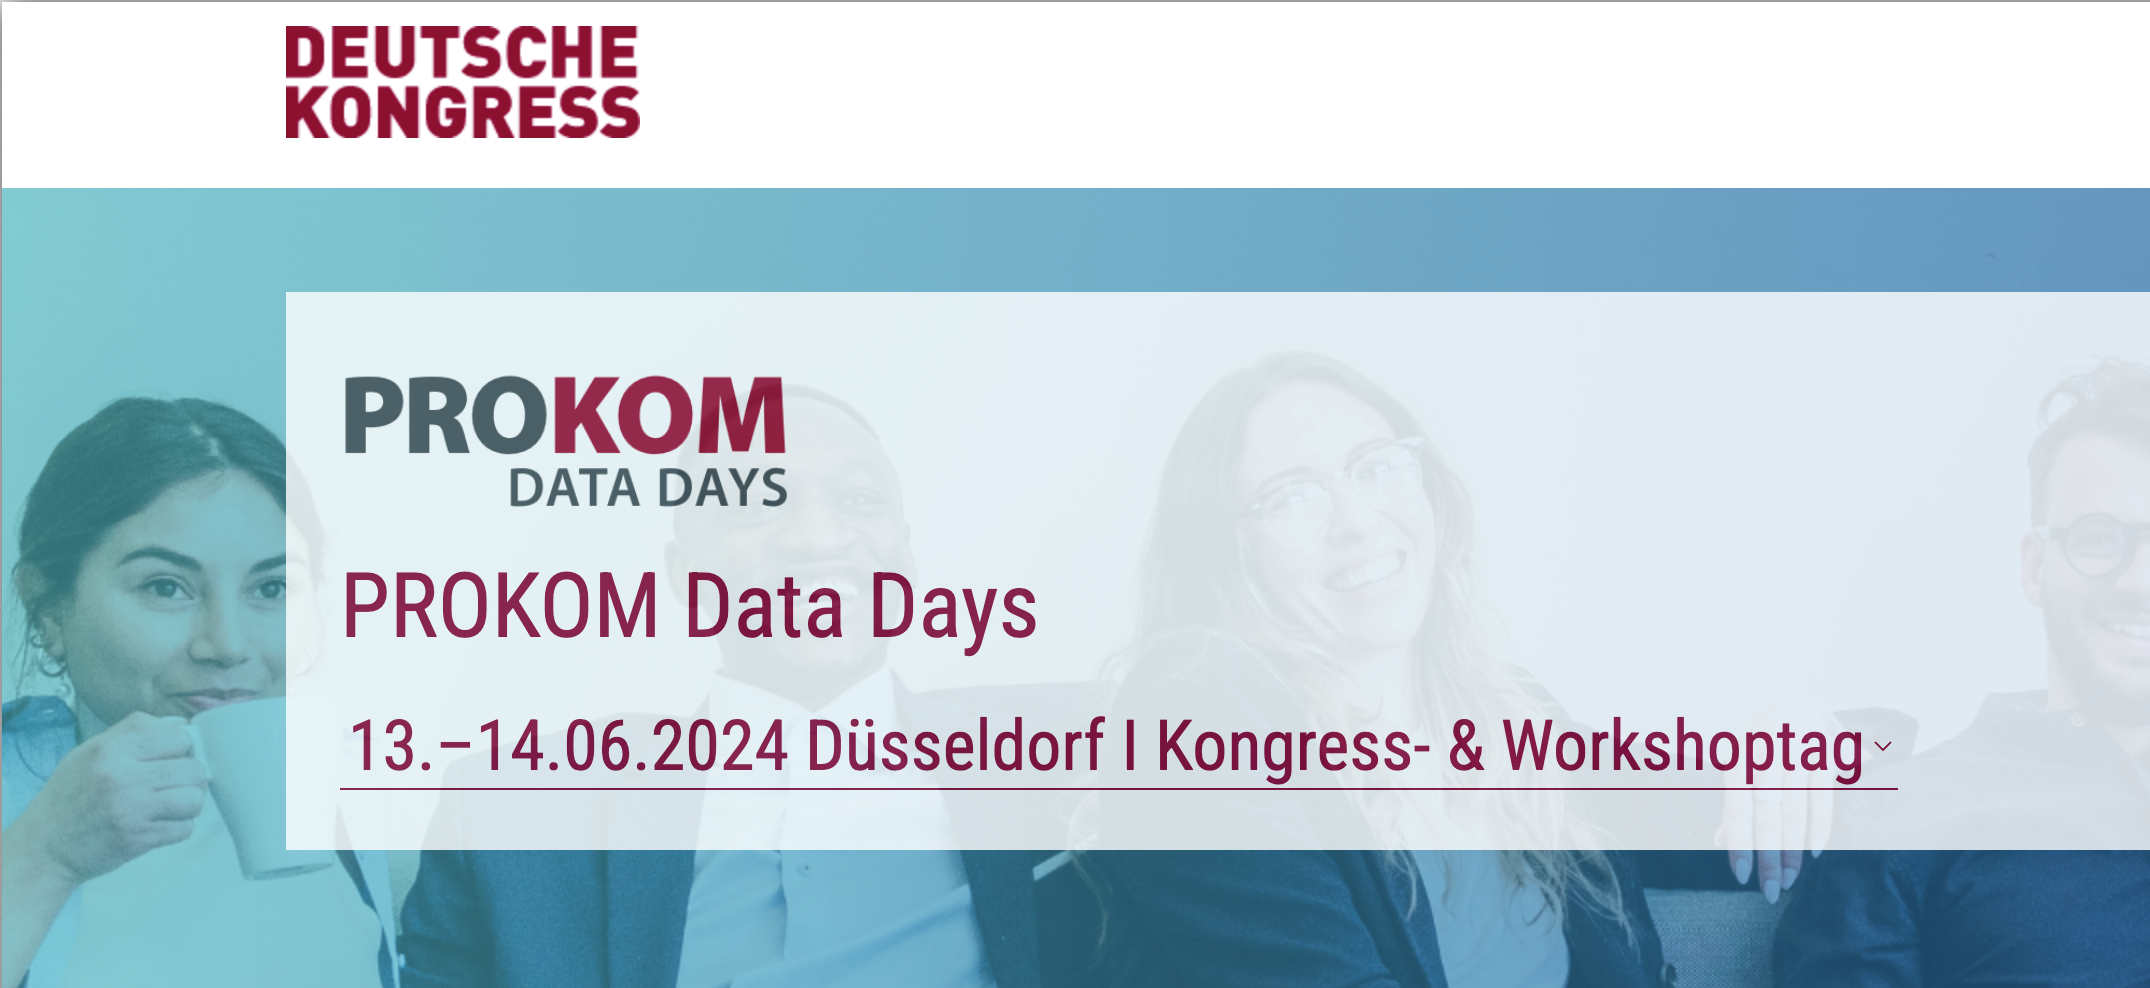 PROKOM Data Days 2024 in Düsseldorf